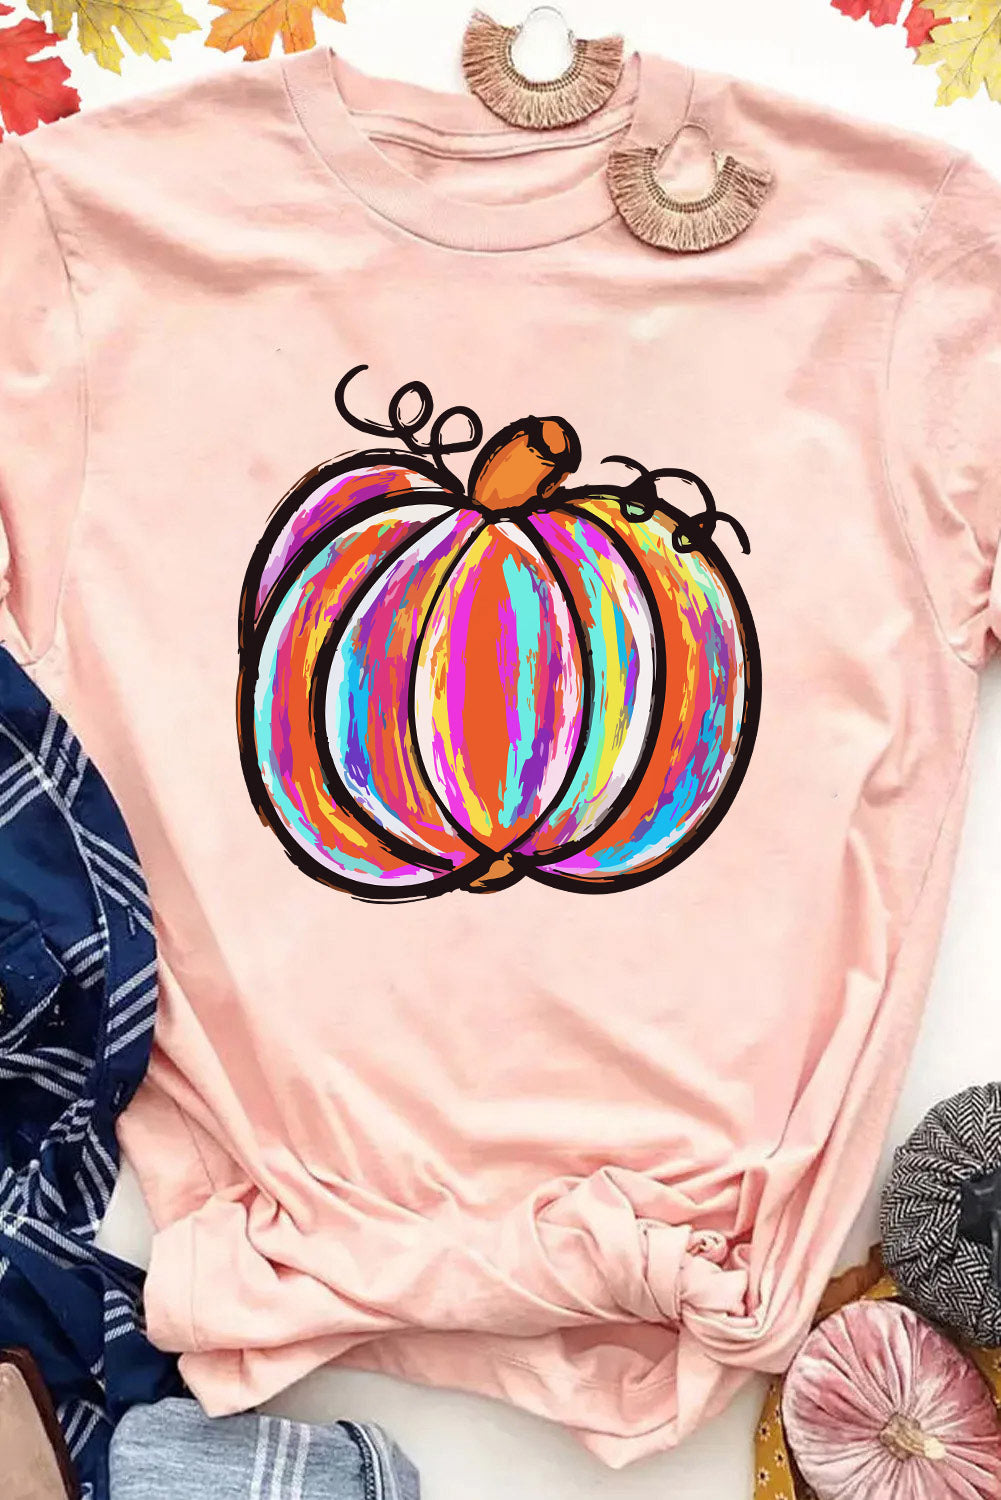 Khaki flannels hayrides pumpkins sweaters bonfires tee - graphic t-shirts